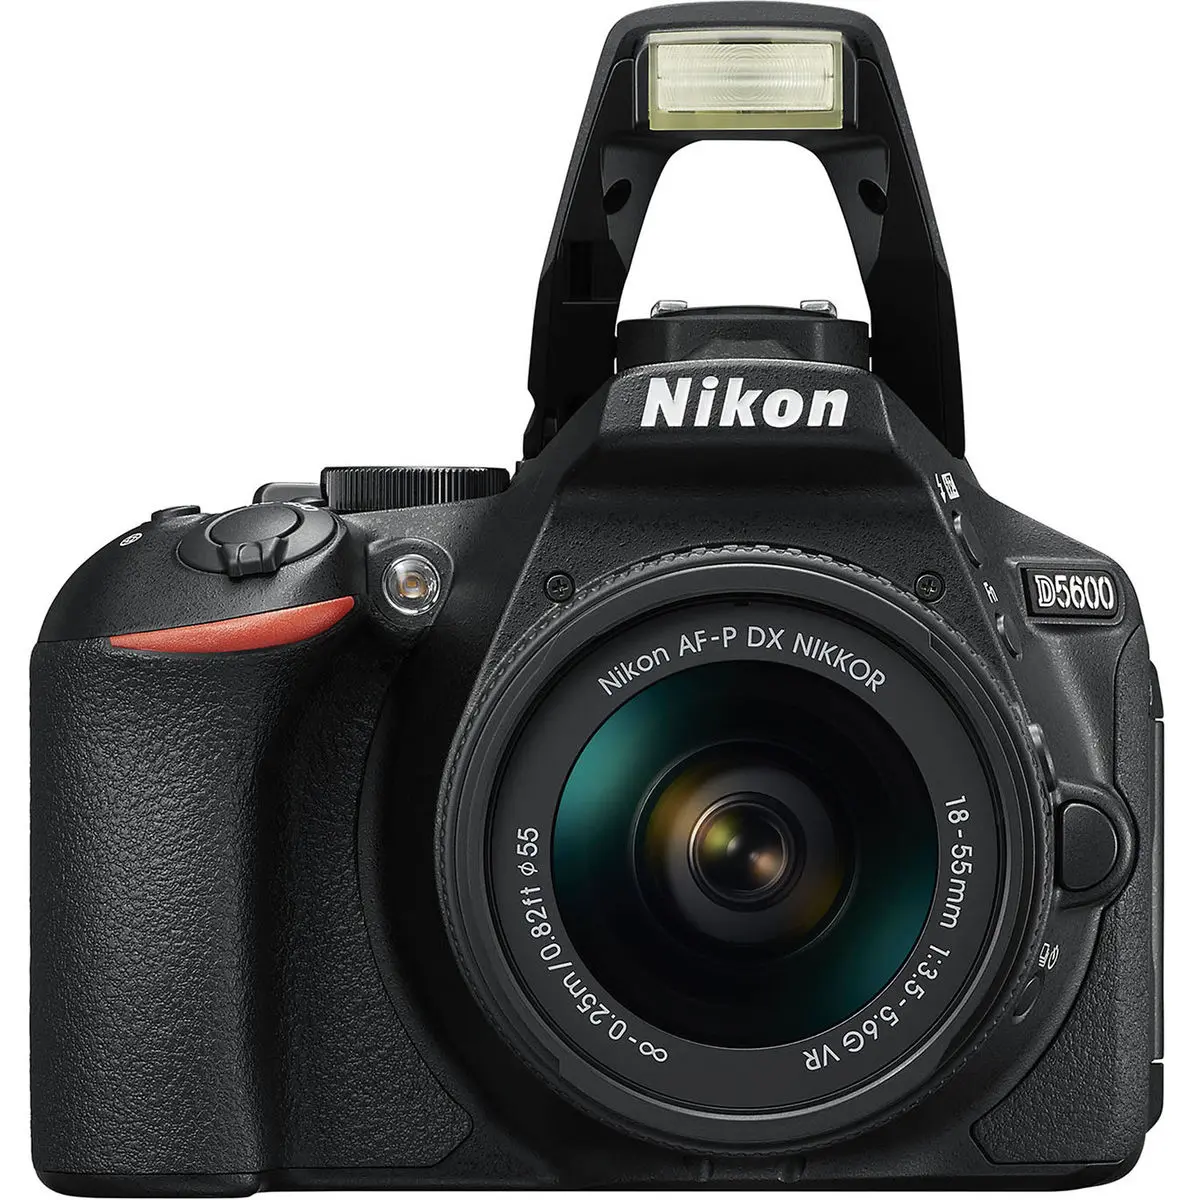 Main Image Nikon D5600 AF-P 18-55 VR Kit WiFi NFC FullHD 24.2MP Camera Black